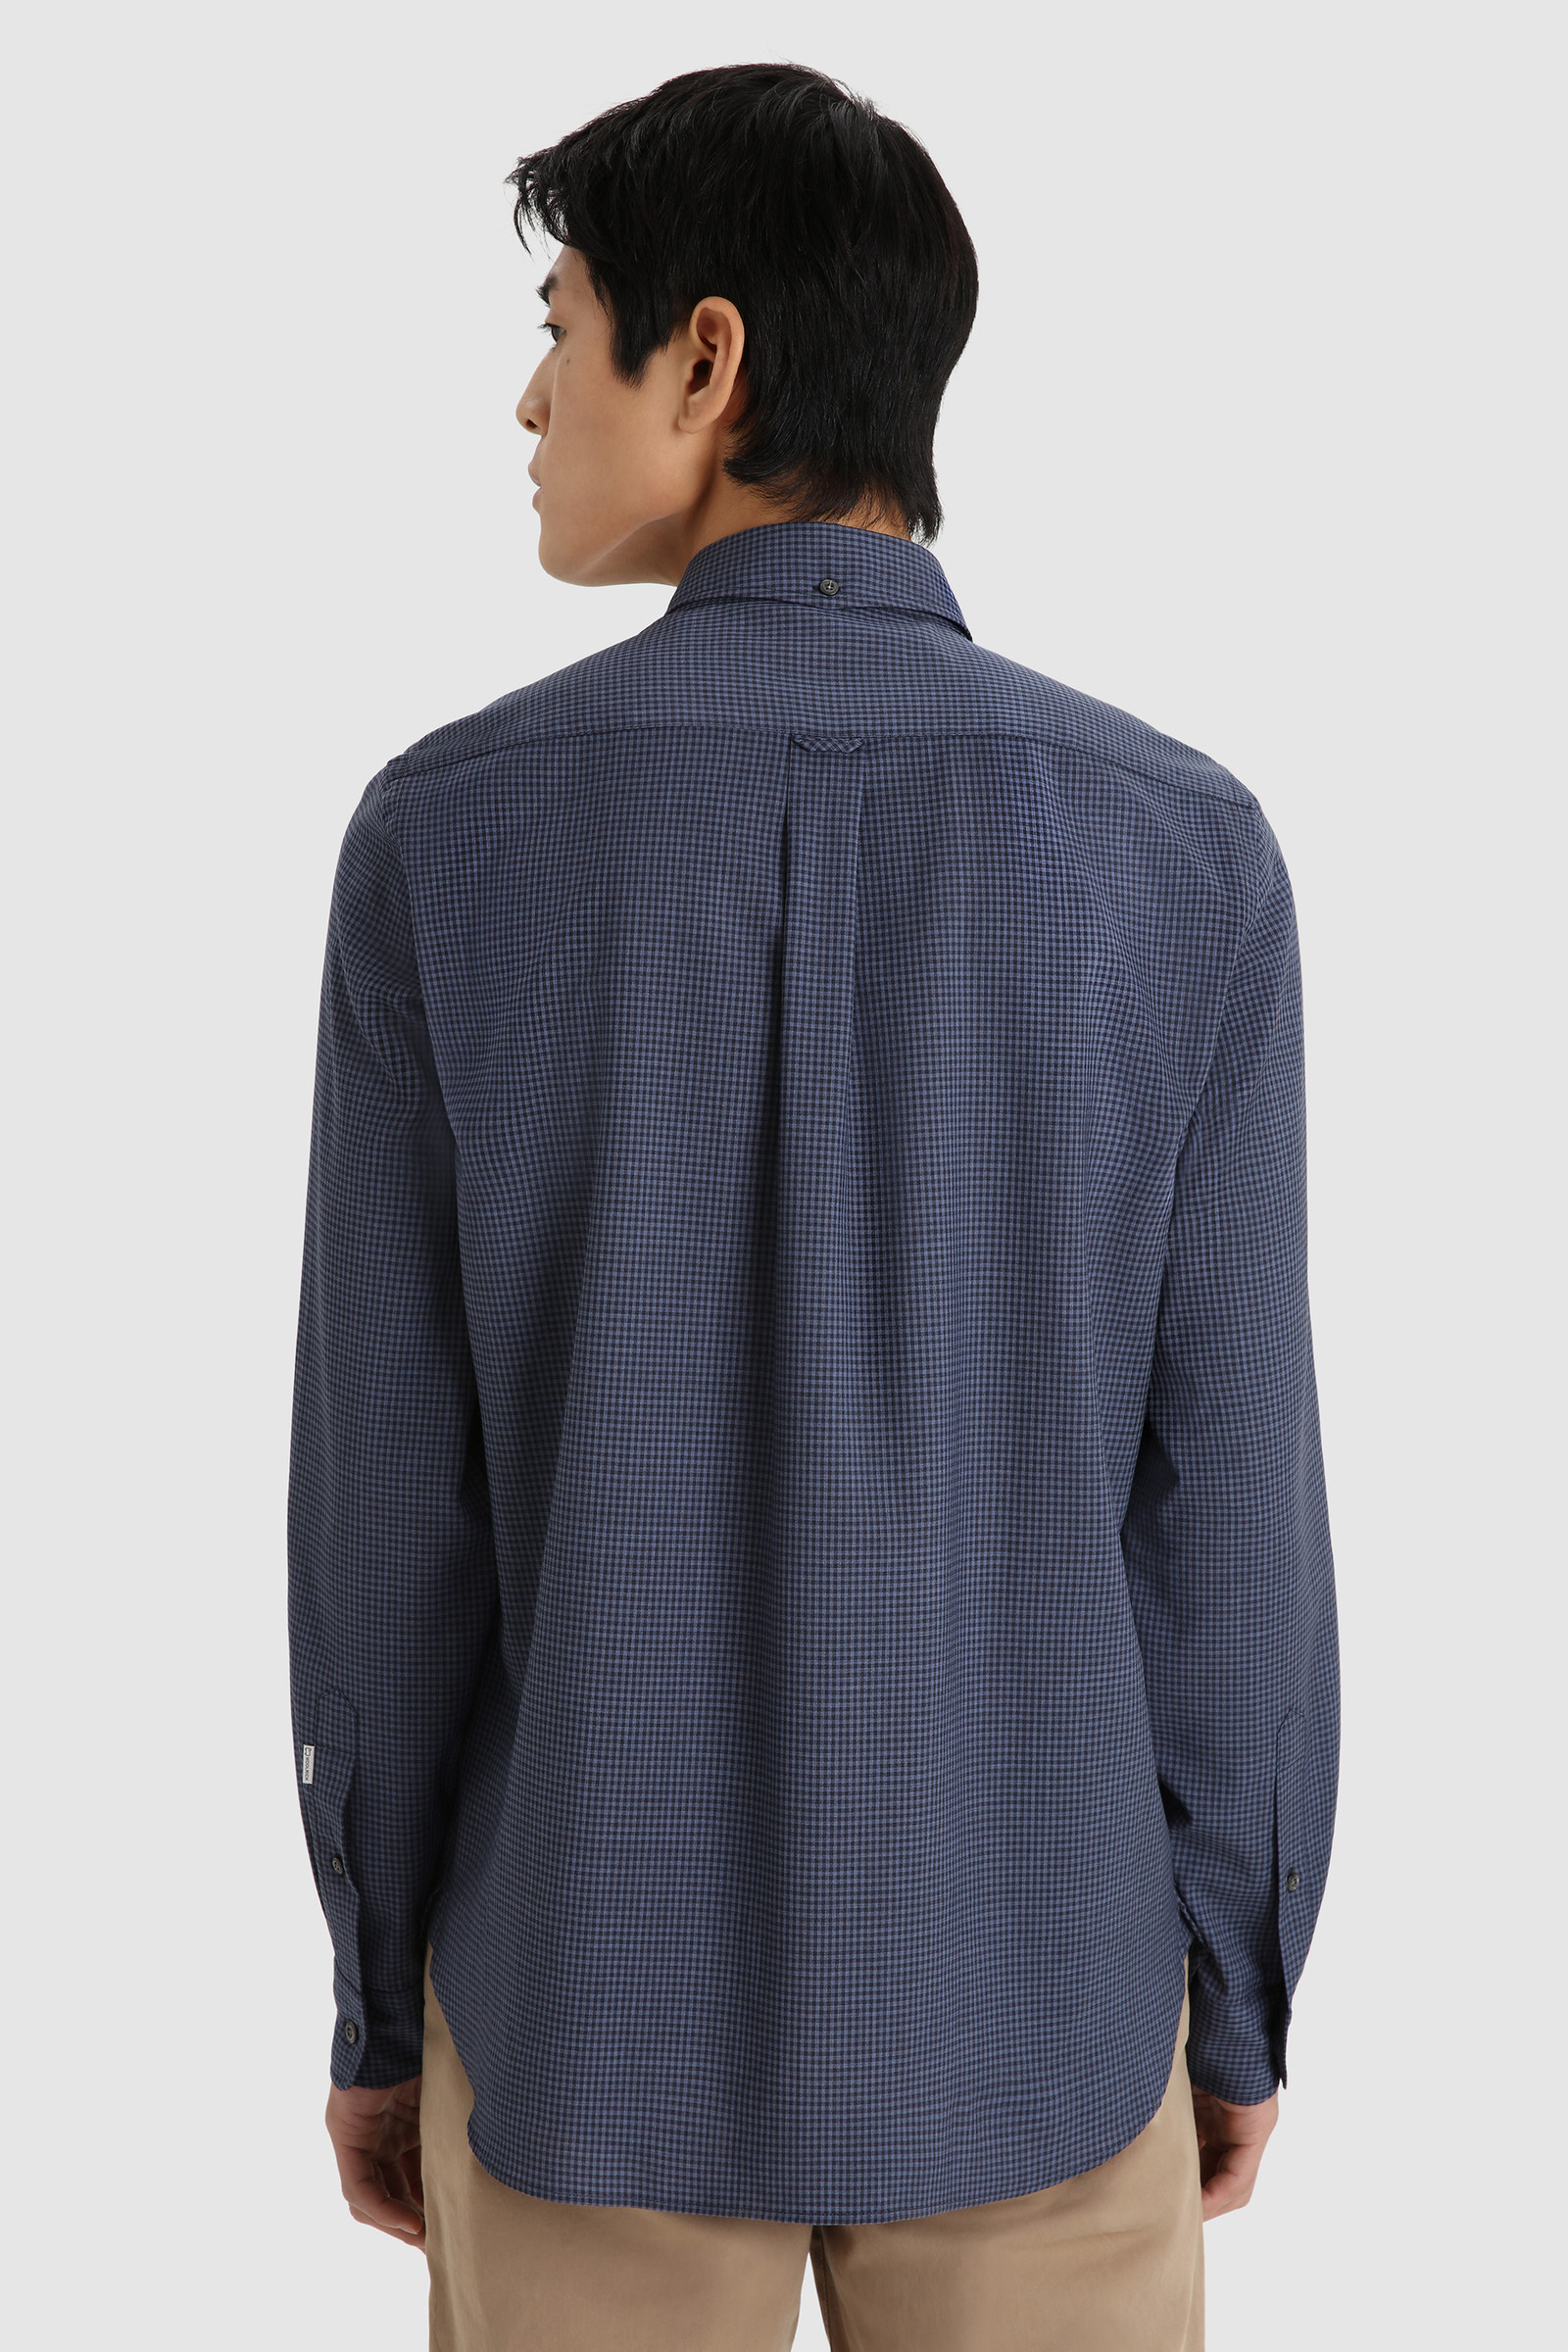 Check Shirt in Cool Virgin Merino Wool Blue | Woolrich USA